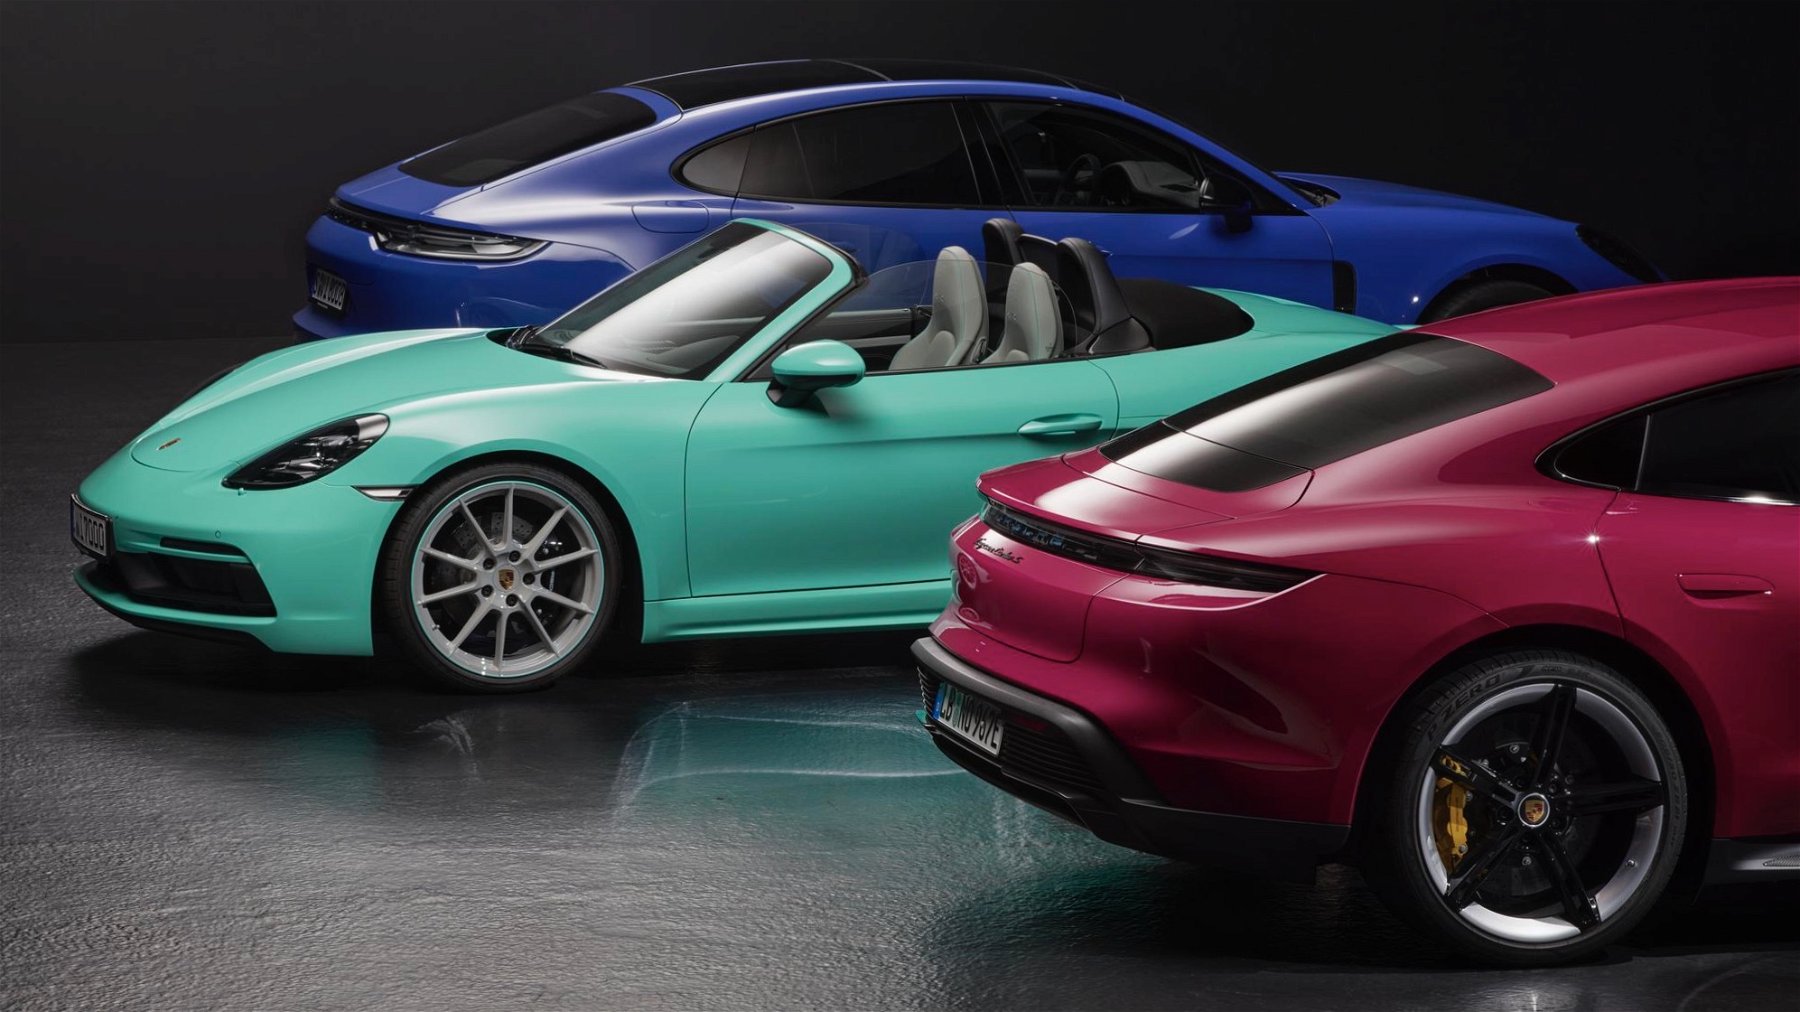 Porsche PTS – Comeback of the cult colors